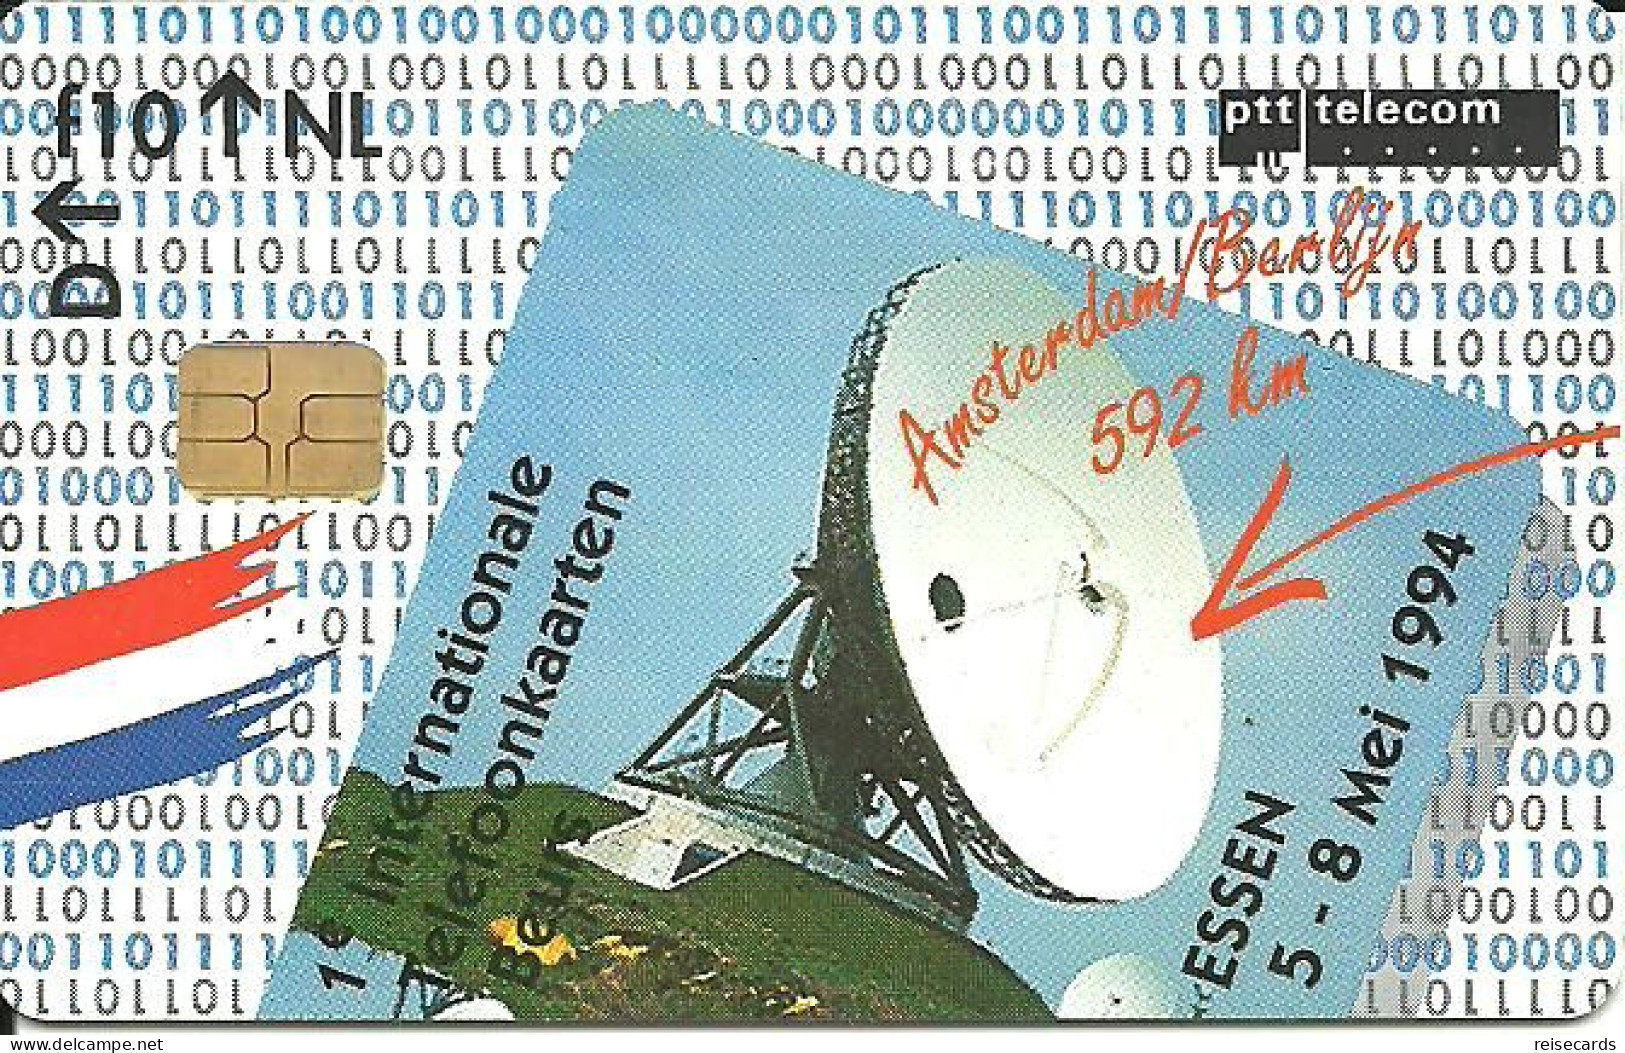 Netherlands: Ptt Telecom - 1994 1. Internationale Telefoonkaarten Beurs 94 Essen. Mint - Públicas